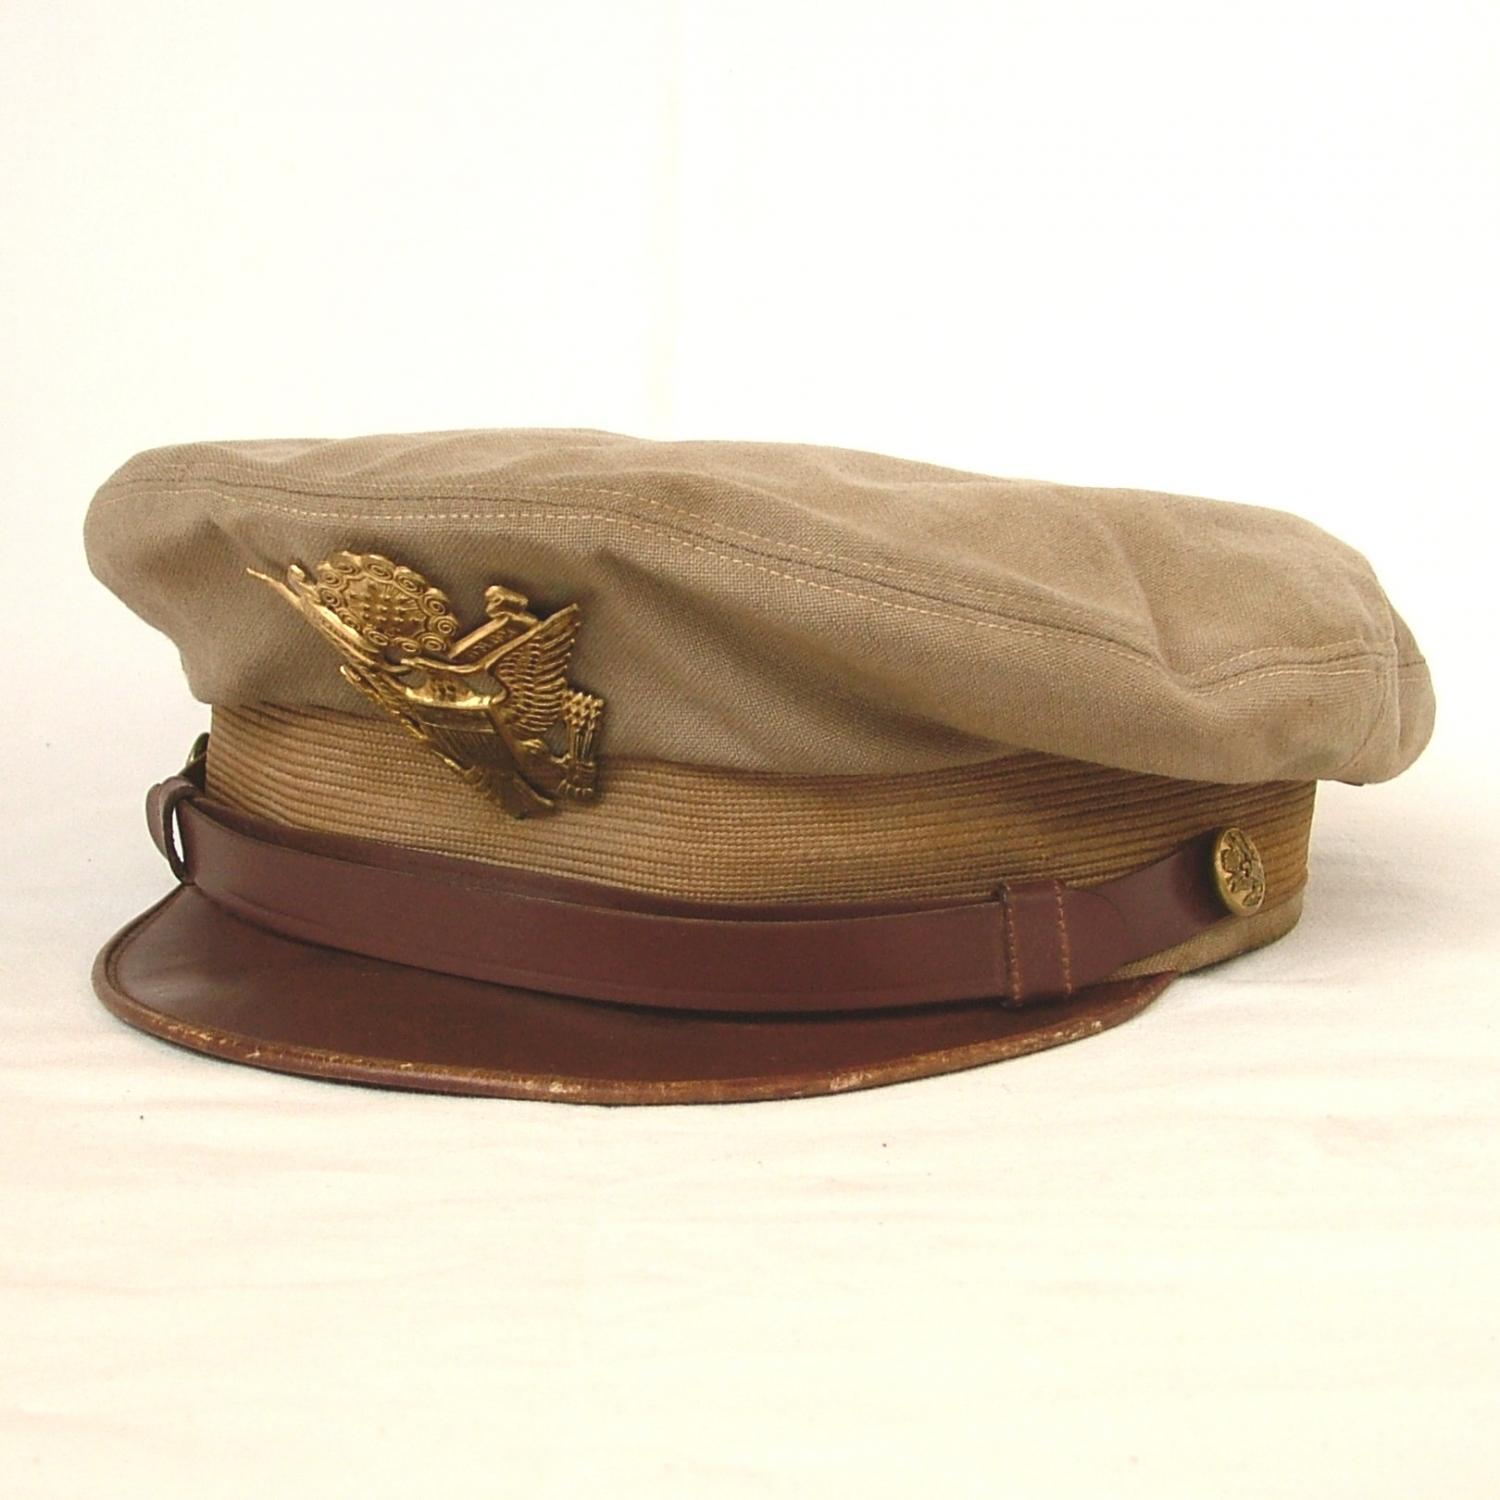 USAAF 'tropical' Bancroft visor cap